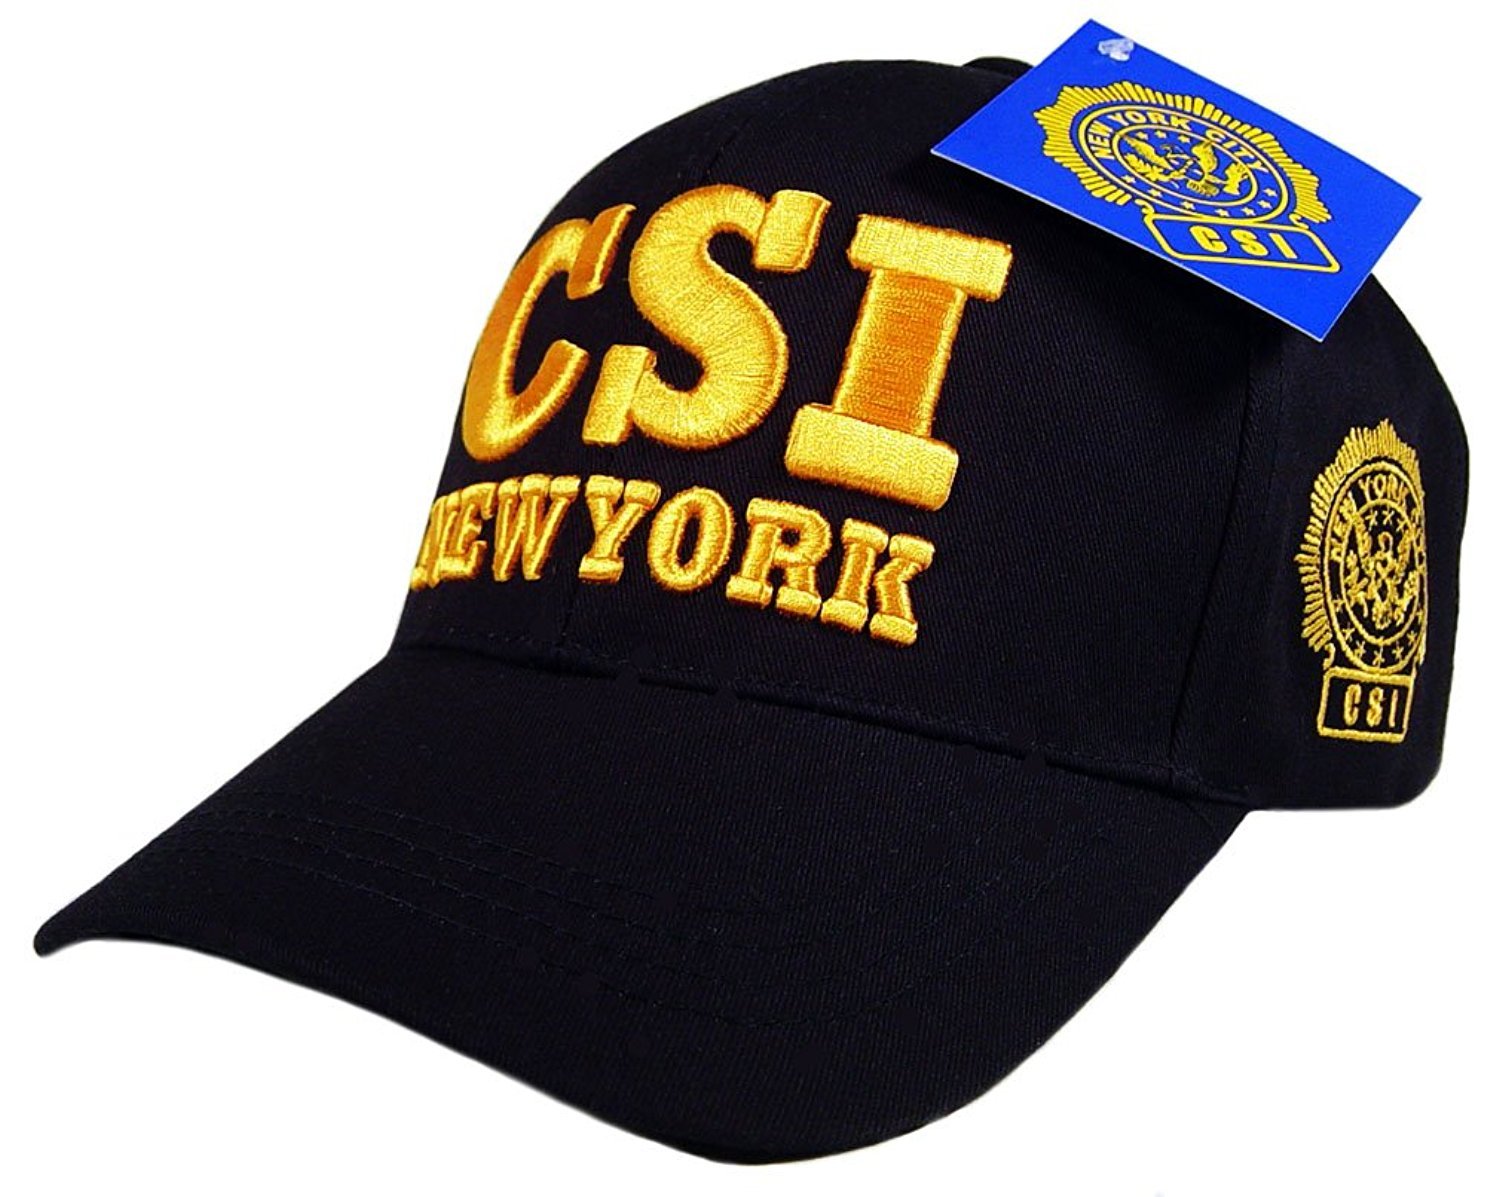 CSI Crime Scene Investigator Logo Law Enforcement Baseball Cap Hat Navy Blue Officially Licensed by New York City